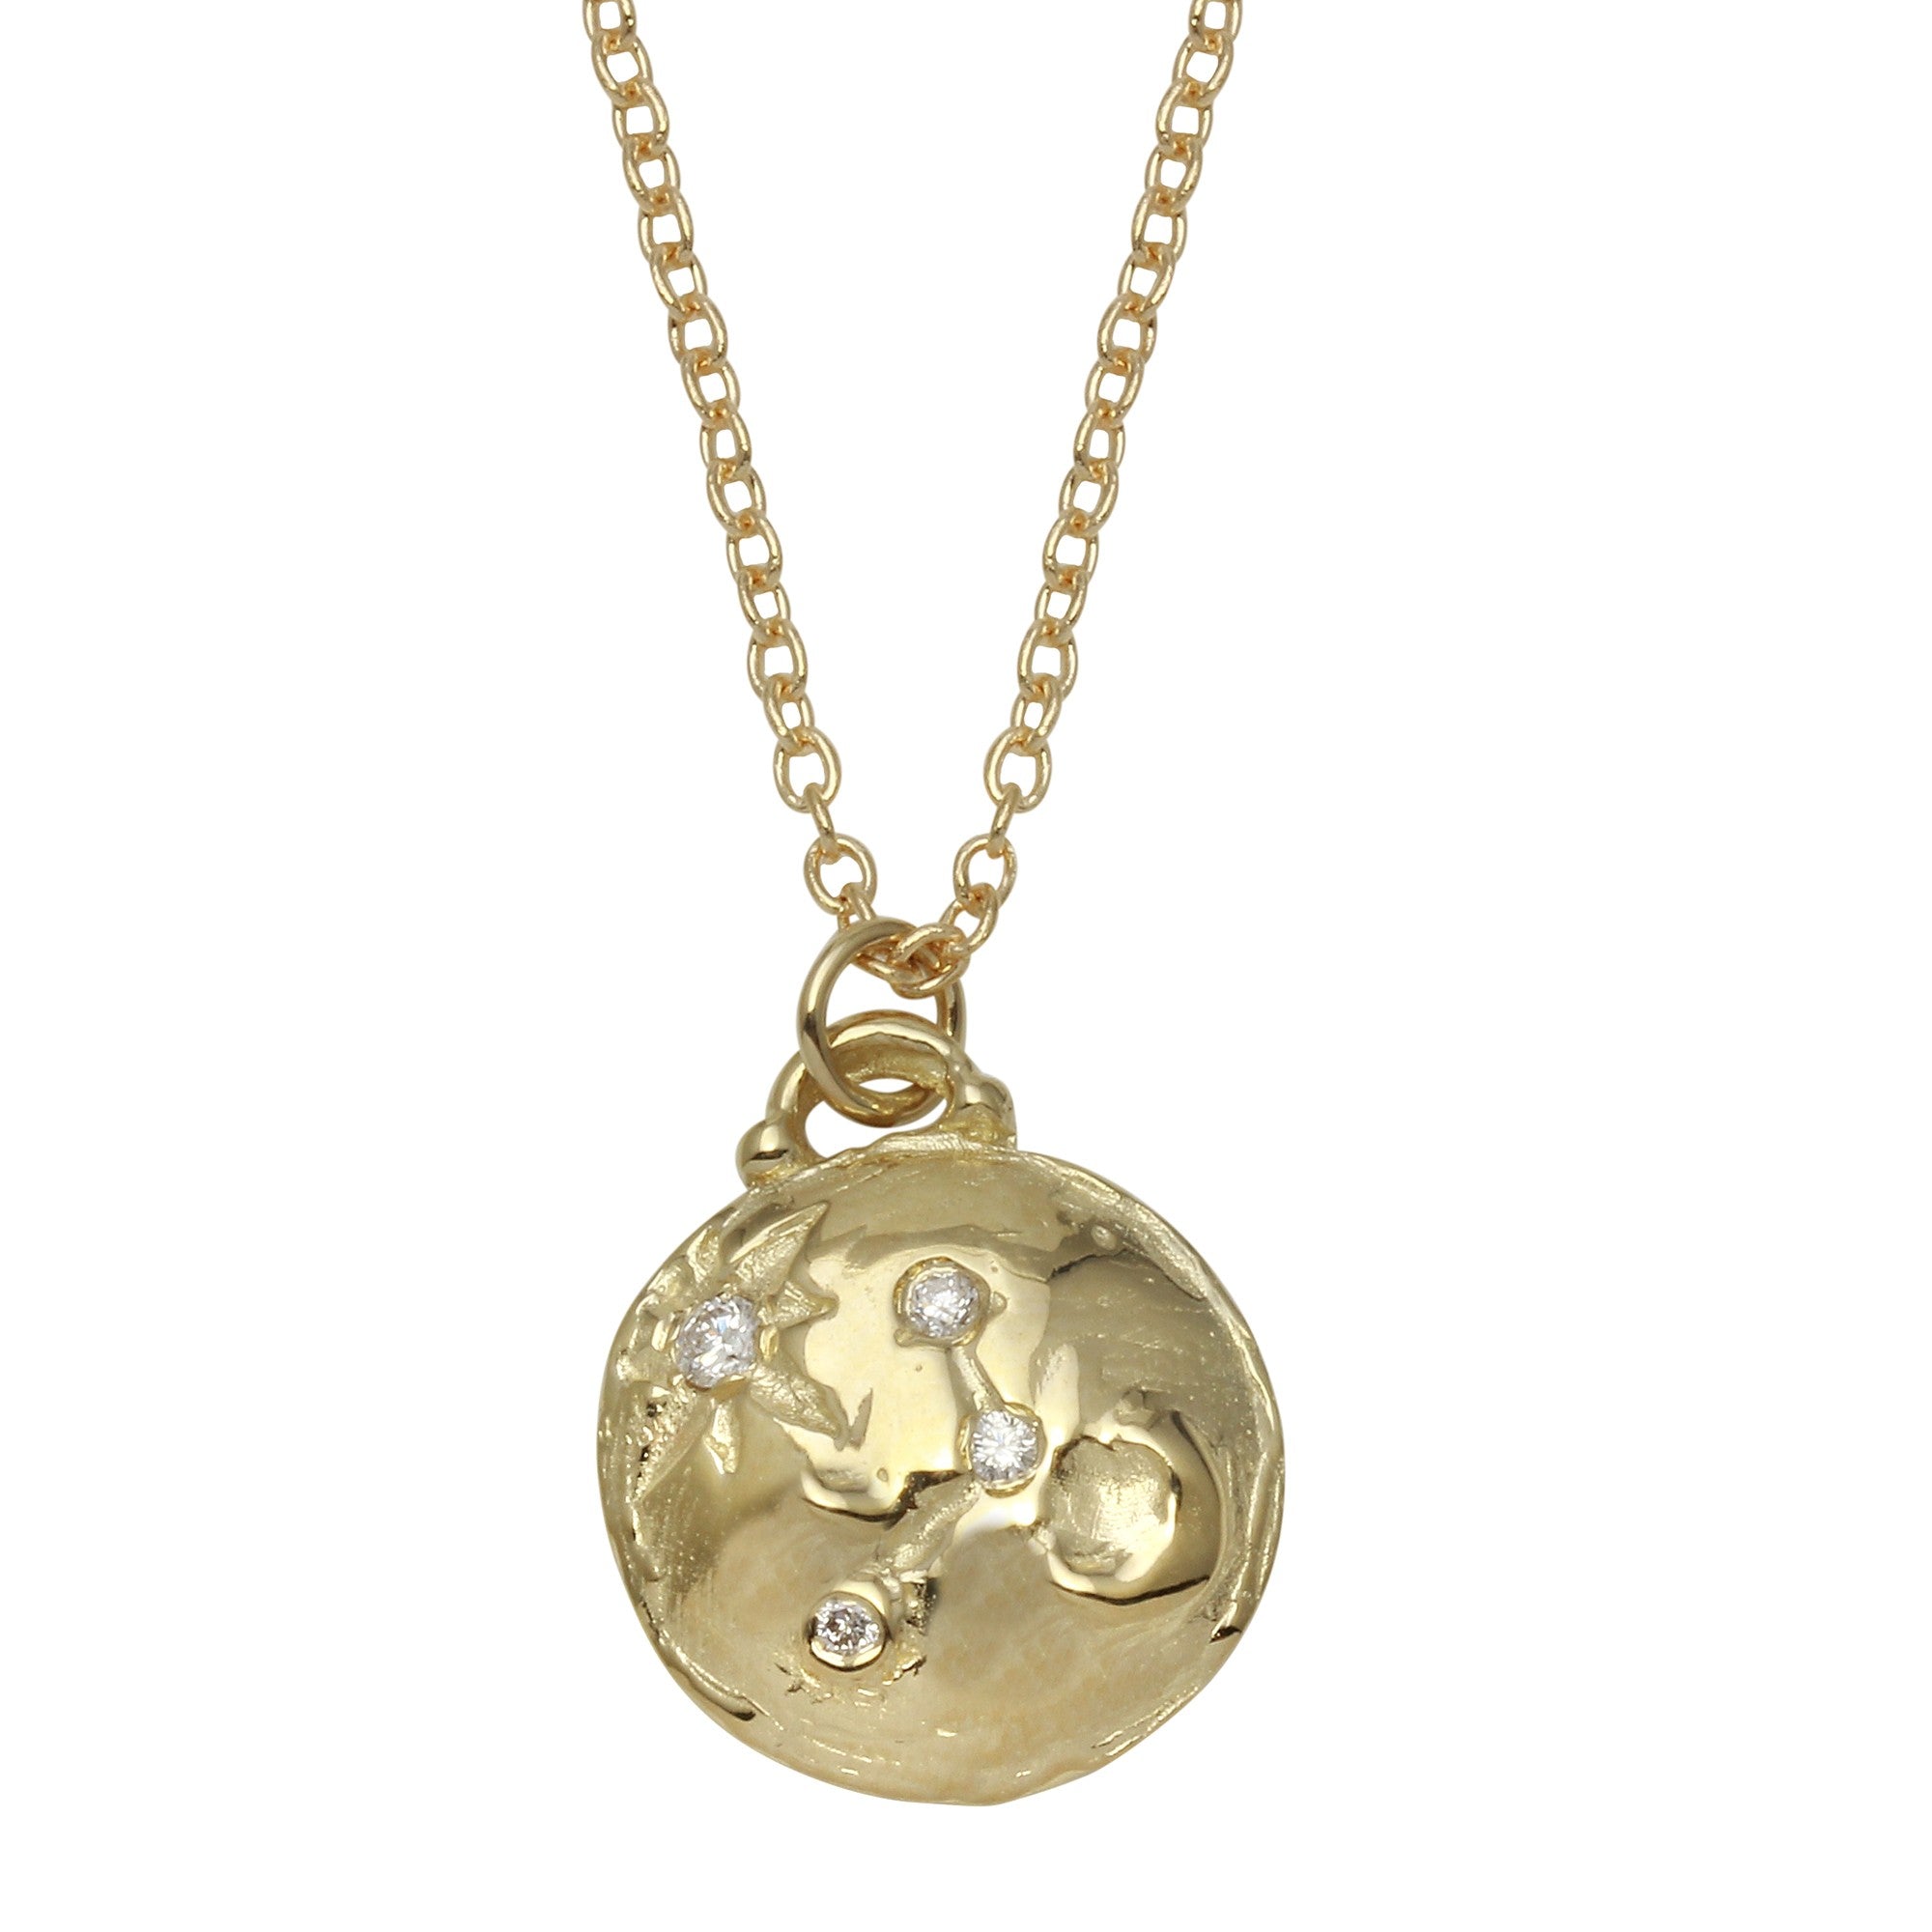 Constellation Coin Necklace Pendant Jaine K Designs   